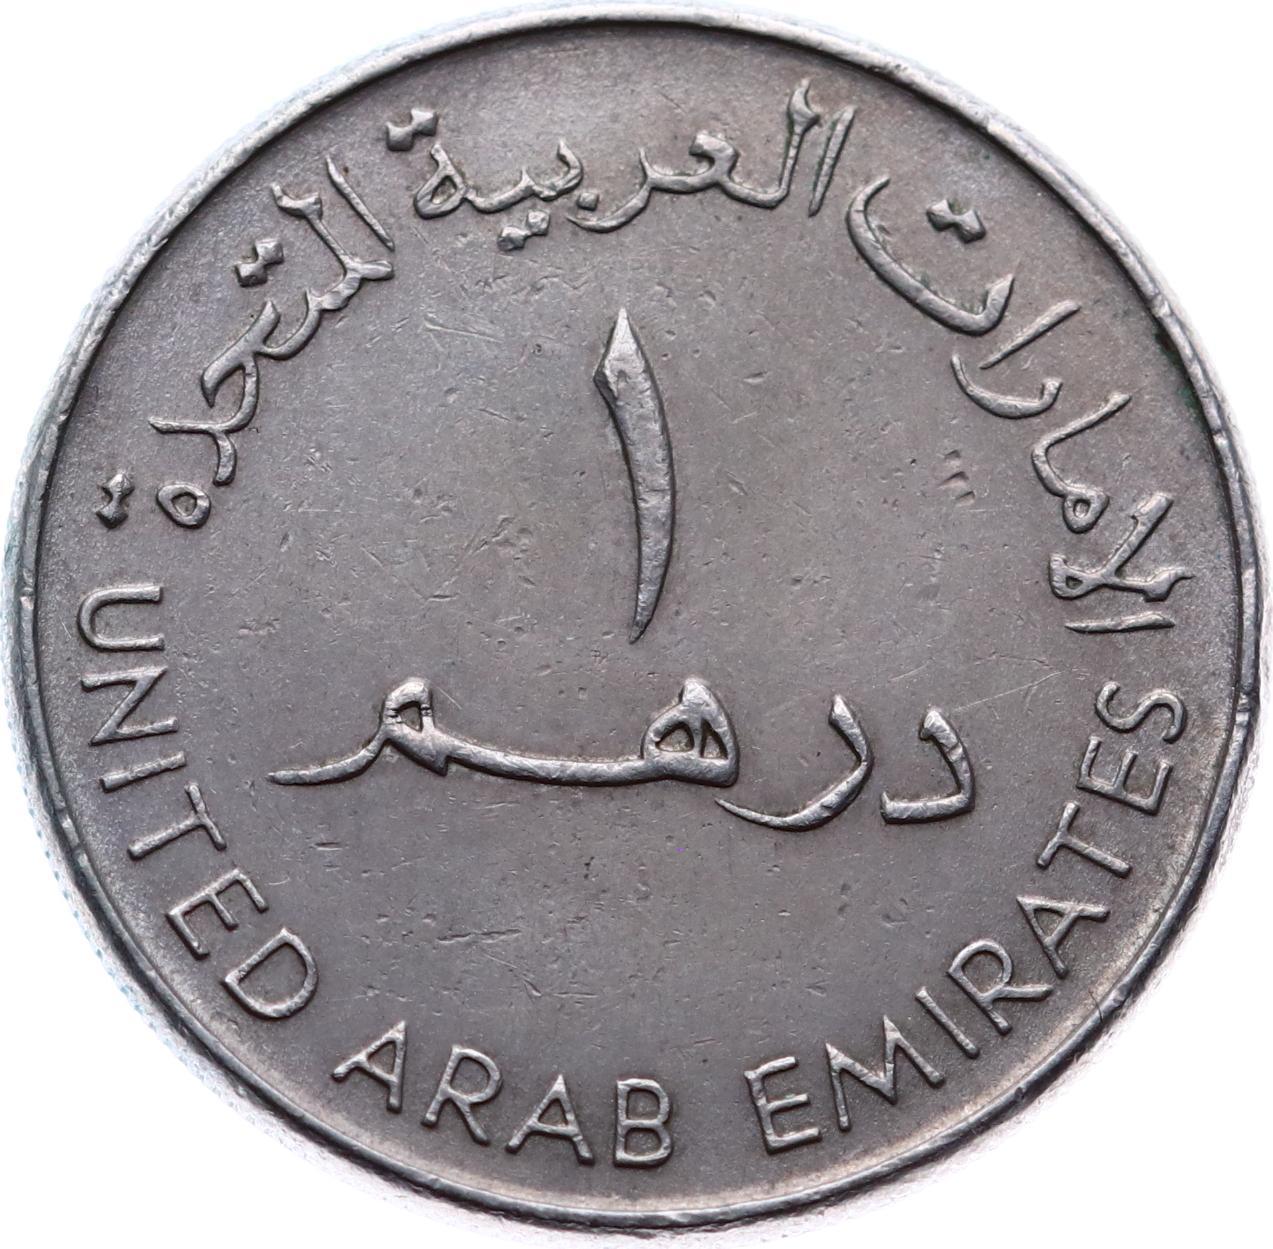 17200 дирхам. Монета United arab Emirates 2007 1428. Arab Emirates монета. United arab Emirates монета 1. Монета United arab Emirates 1993-1998.